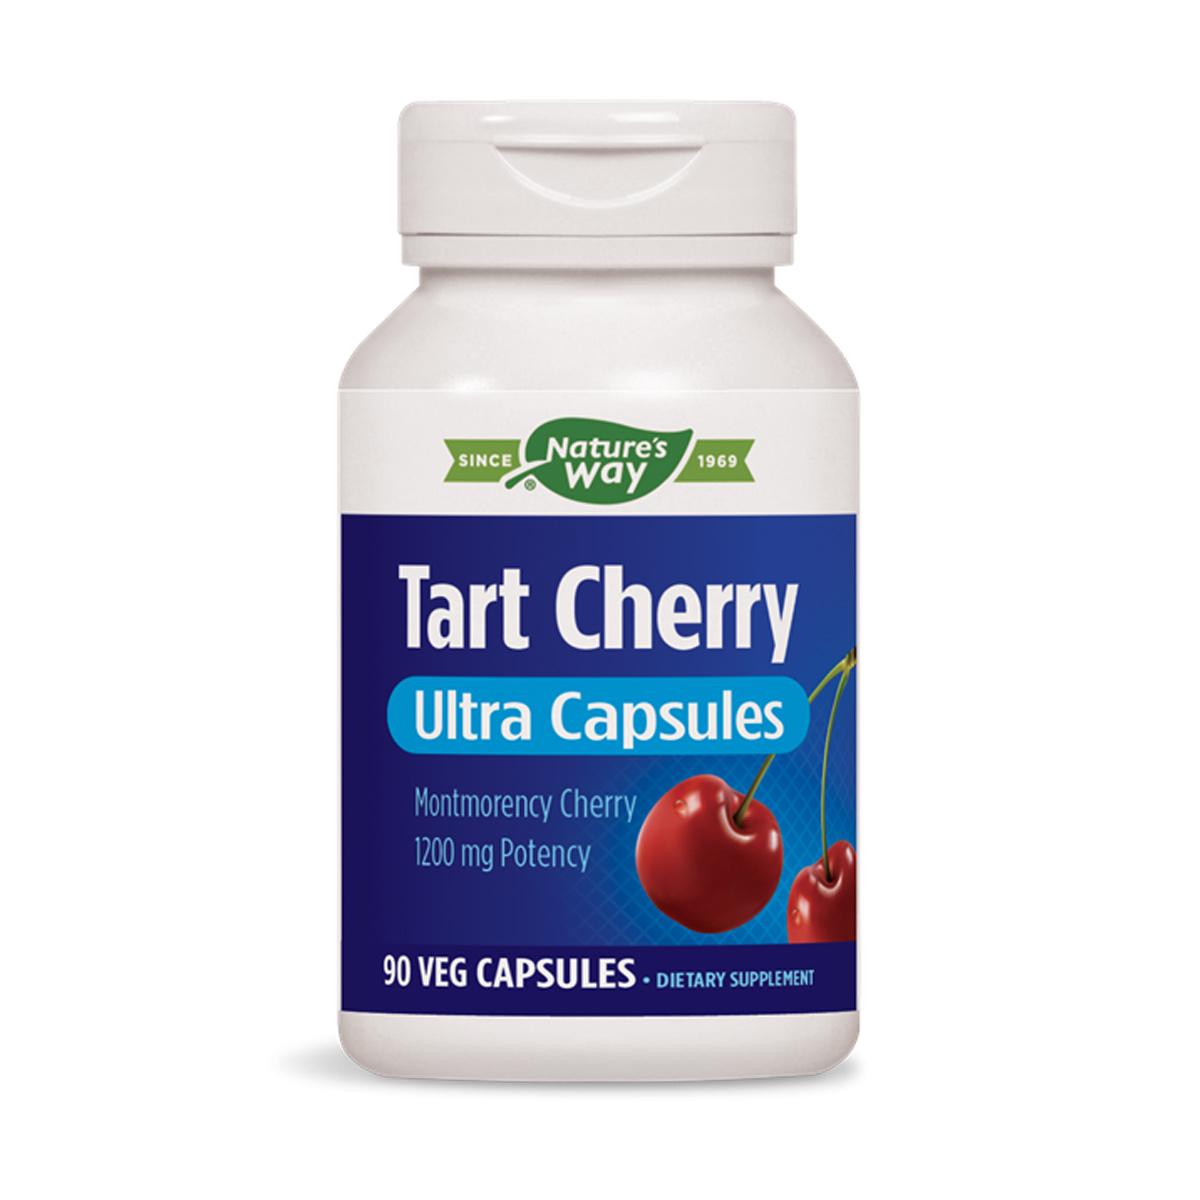 Primary image of Tart Cherry Ultra